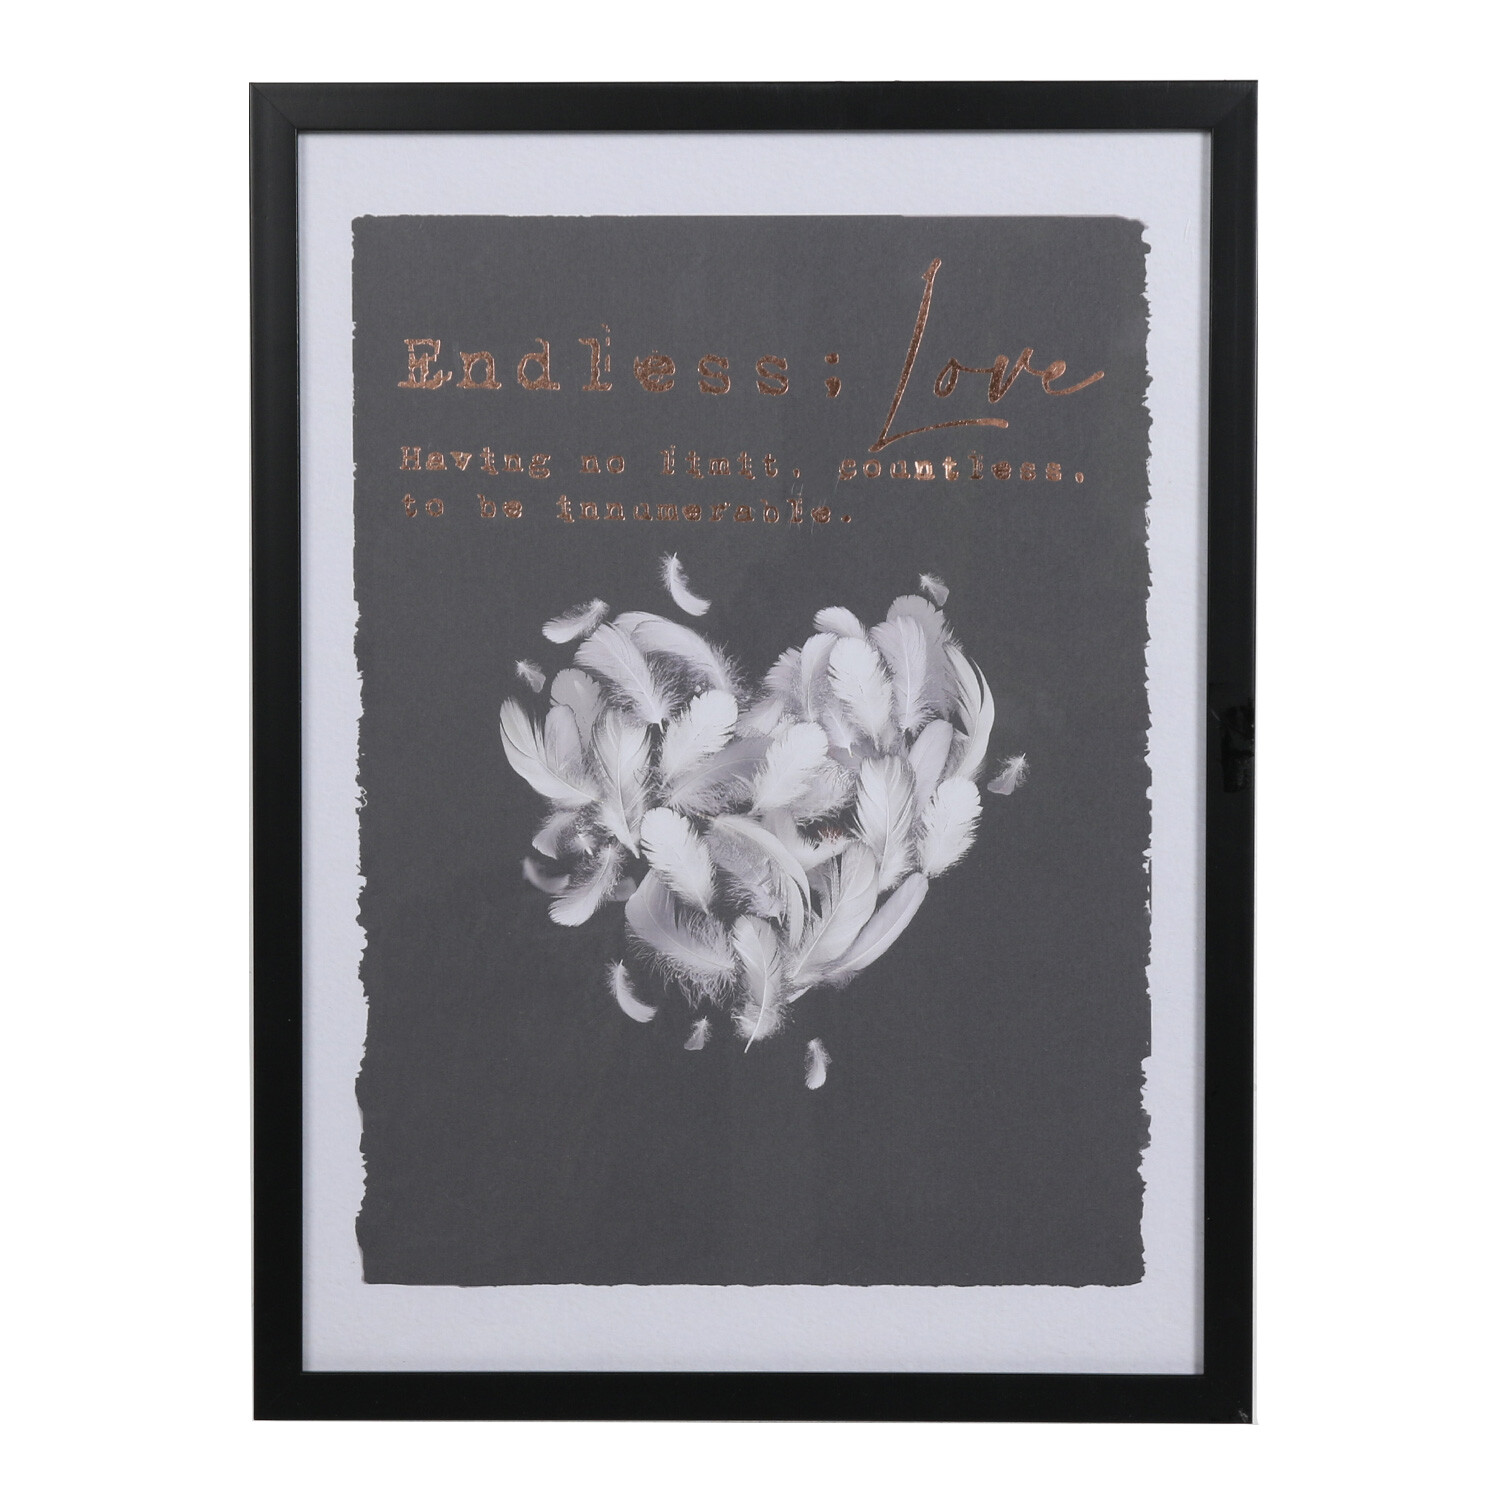 Endless Dreams Feather Foiled Framed Art - Black Image 2